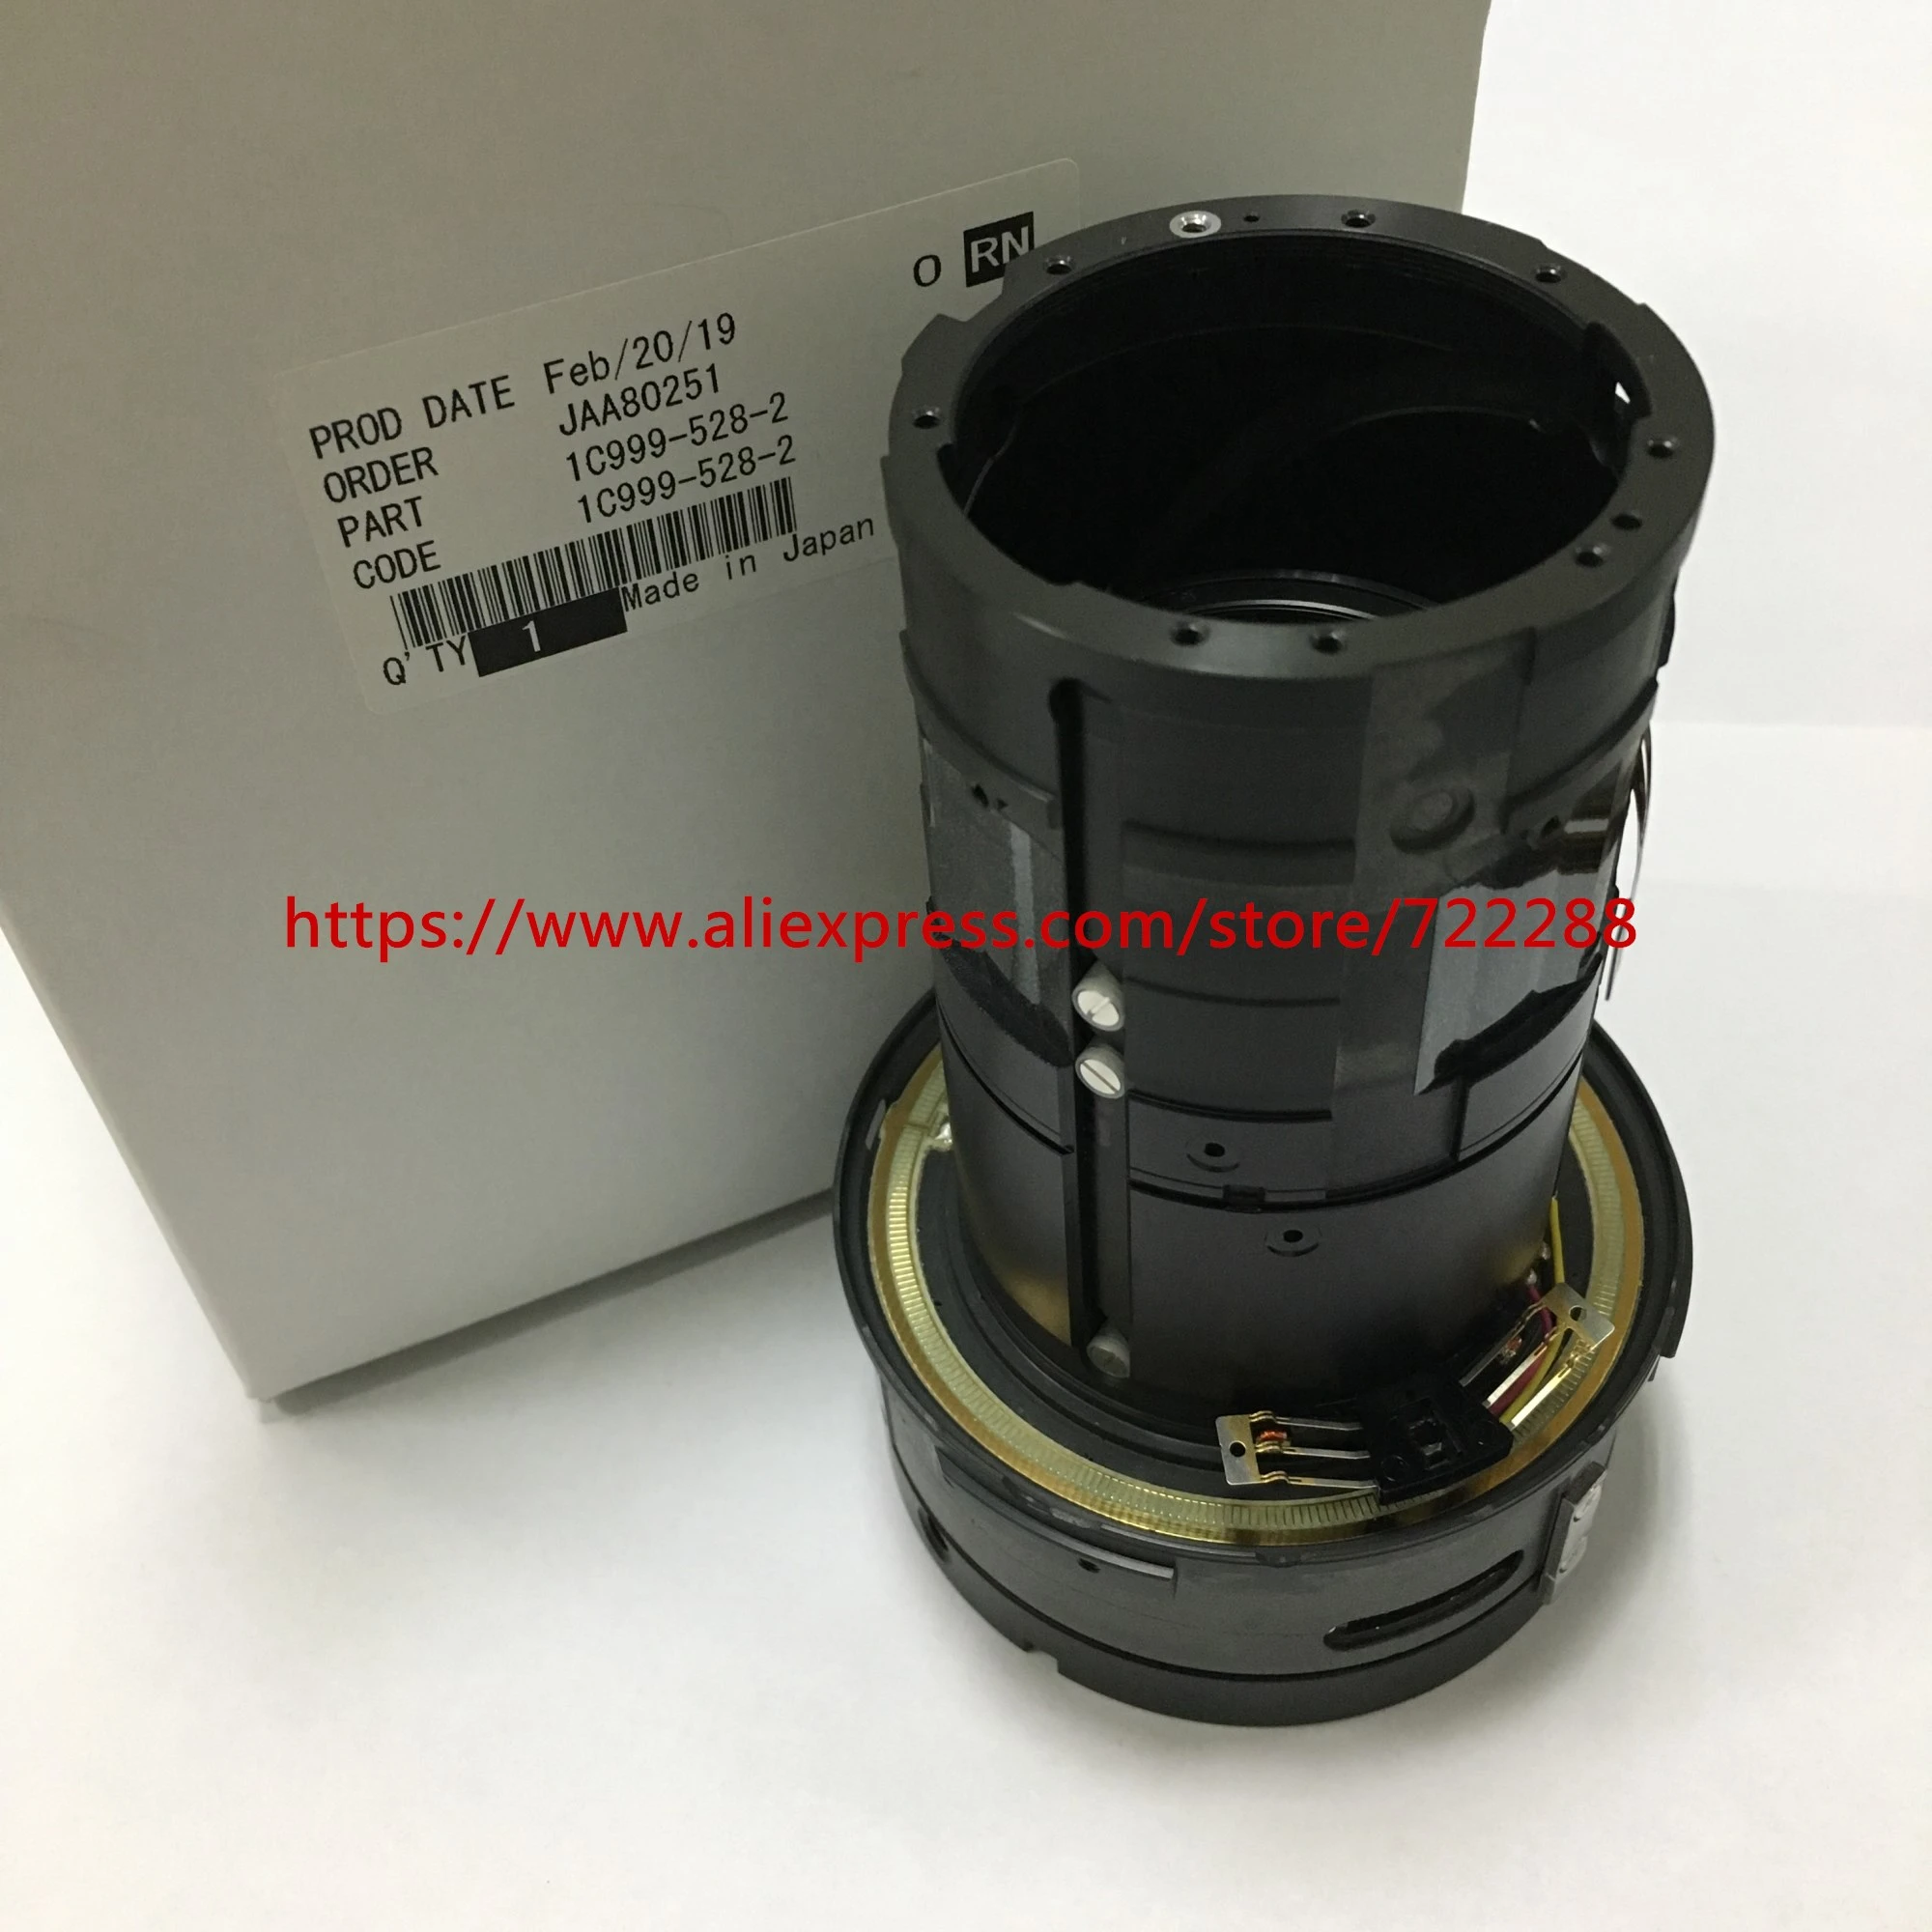 Repair Parts For Nikon Af S Nikkor 24 70mm F 2 8g Ed Lens Barrel Aperture Zoom Unit 1c999 528 2 Parts Parts For Aliexpress